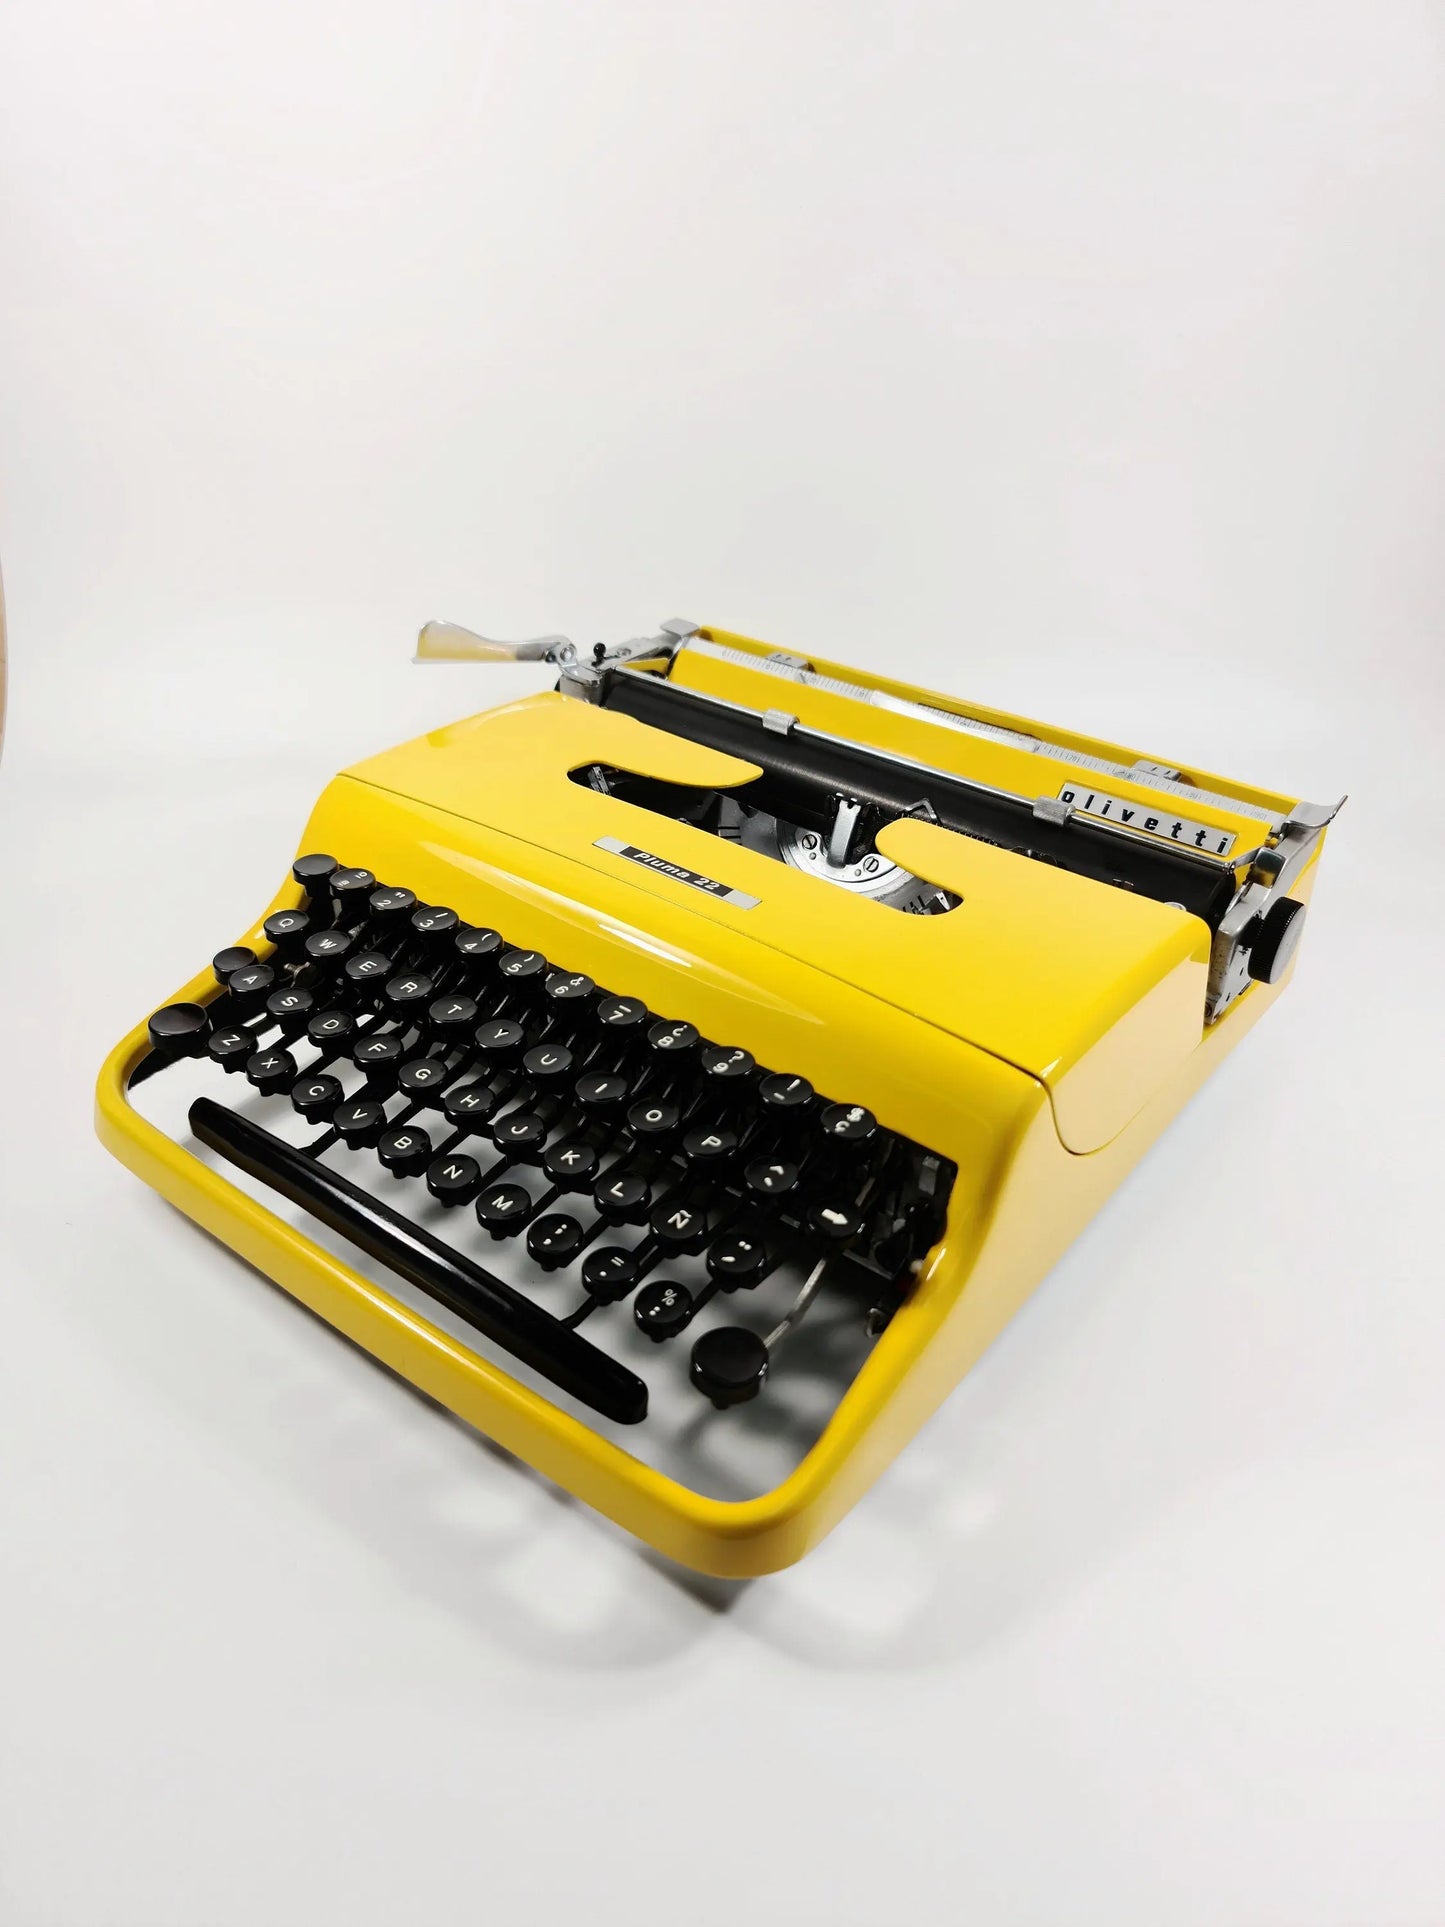 SALE! - Limited Edition Olivetti Pluma 22 Yellow Typewriter, Vintage, Mint Condition, Professionally Serviced - ElGranero Typewriter.Company